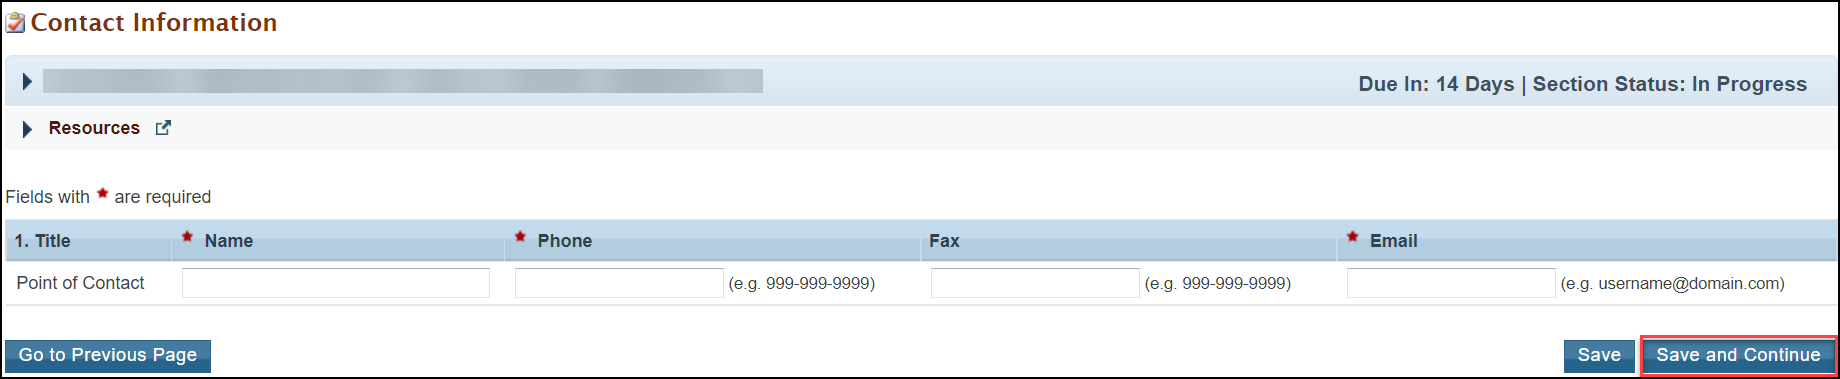 Screenshot of Contact Information Form